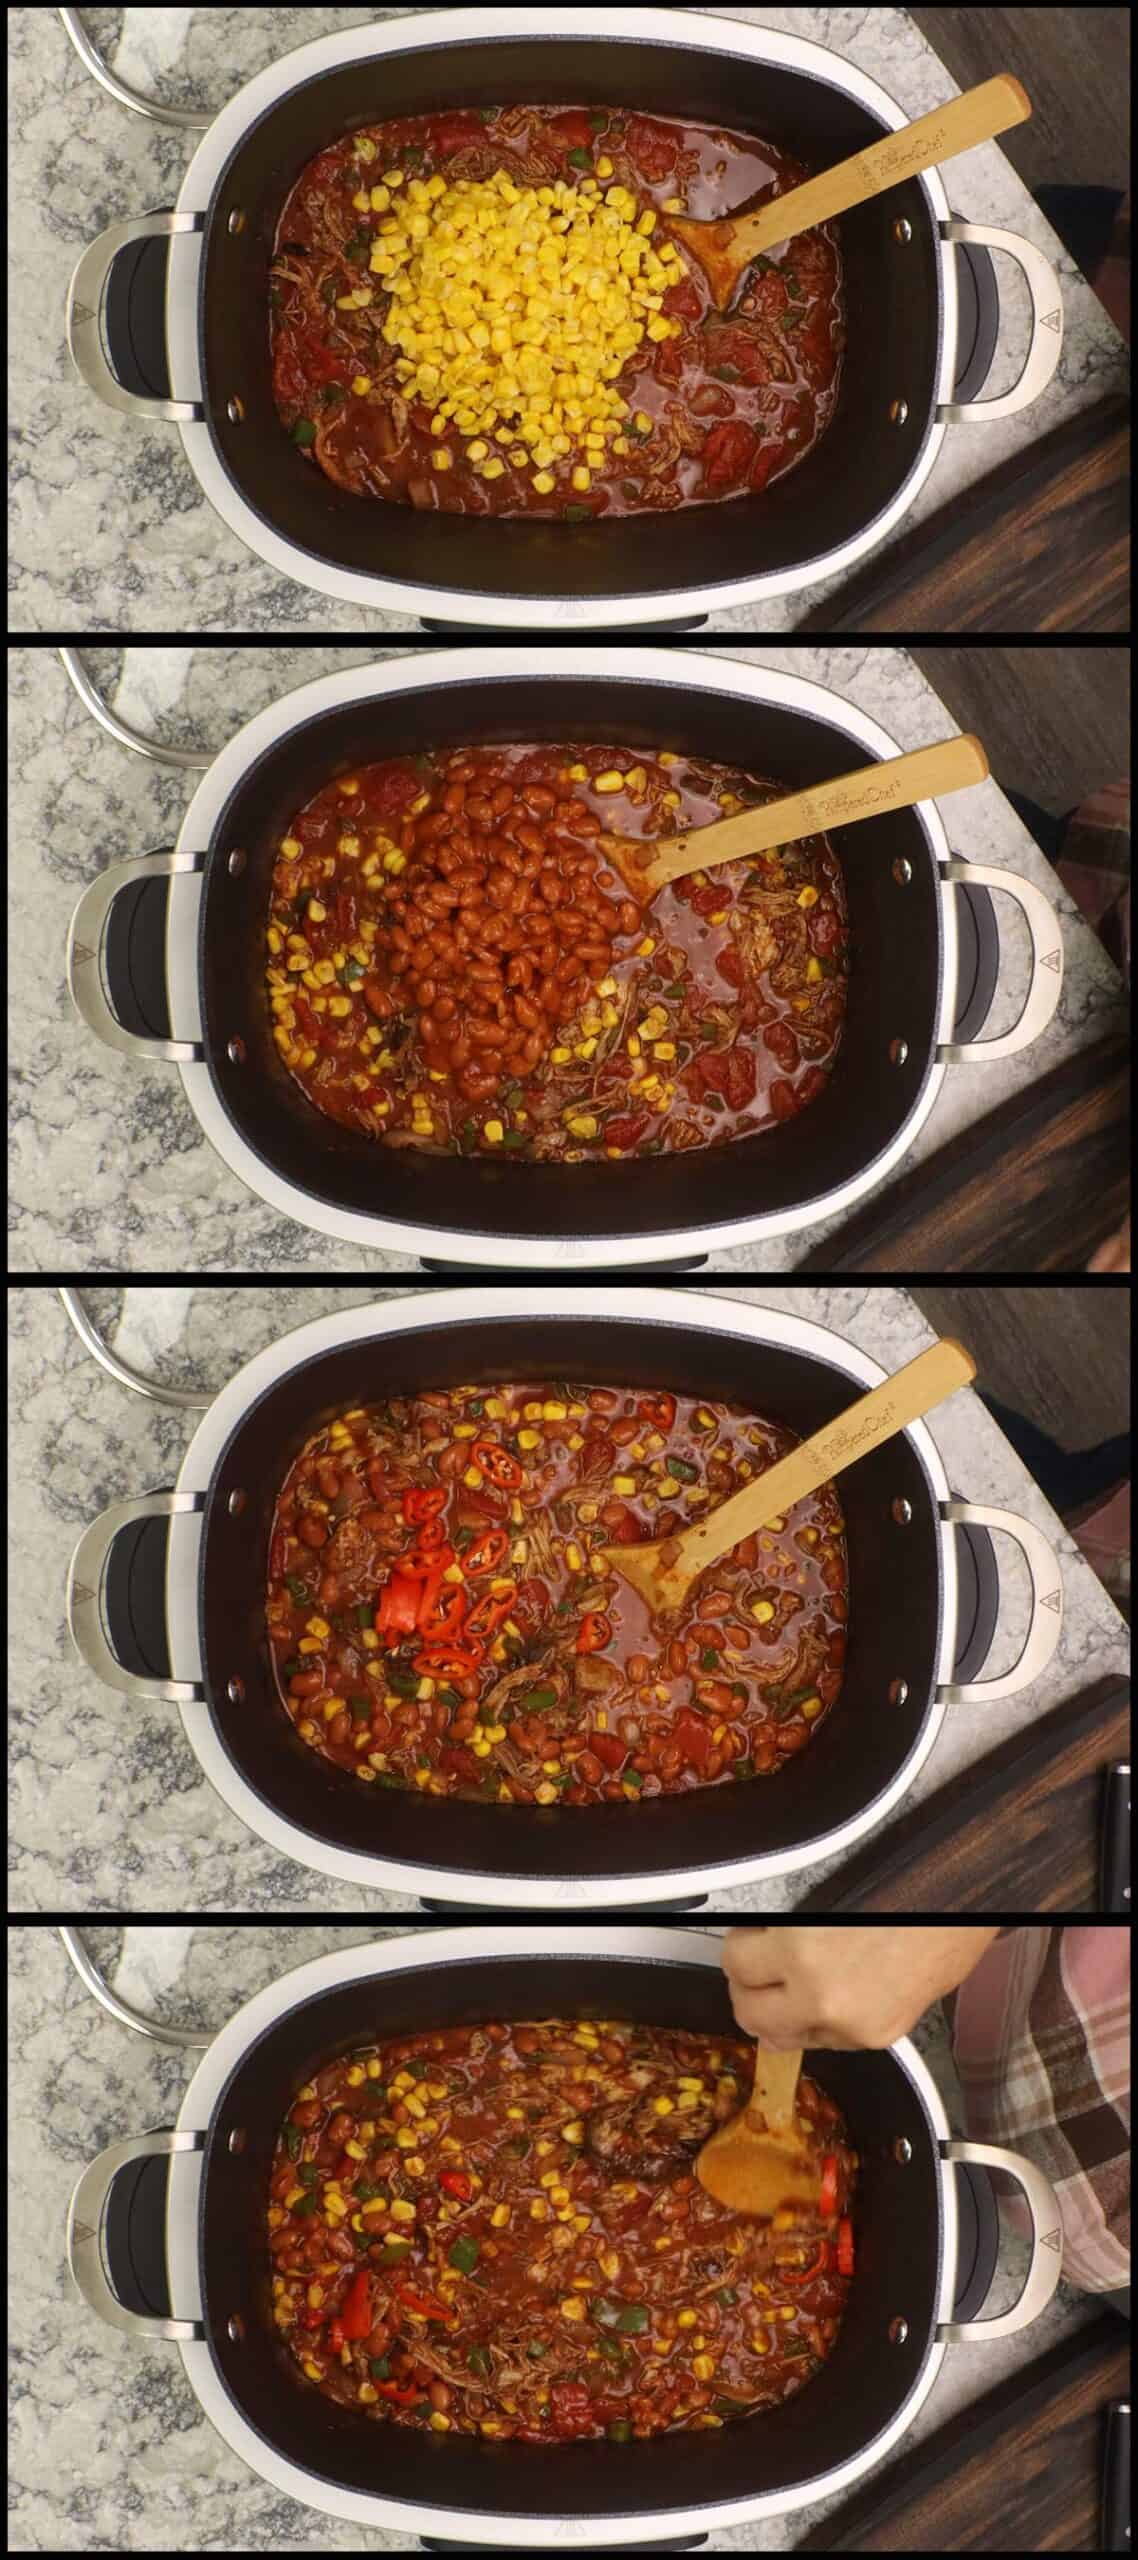 adding corn and hot pepper.